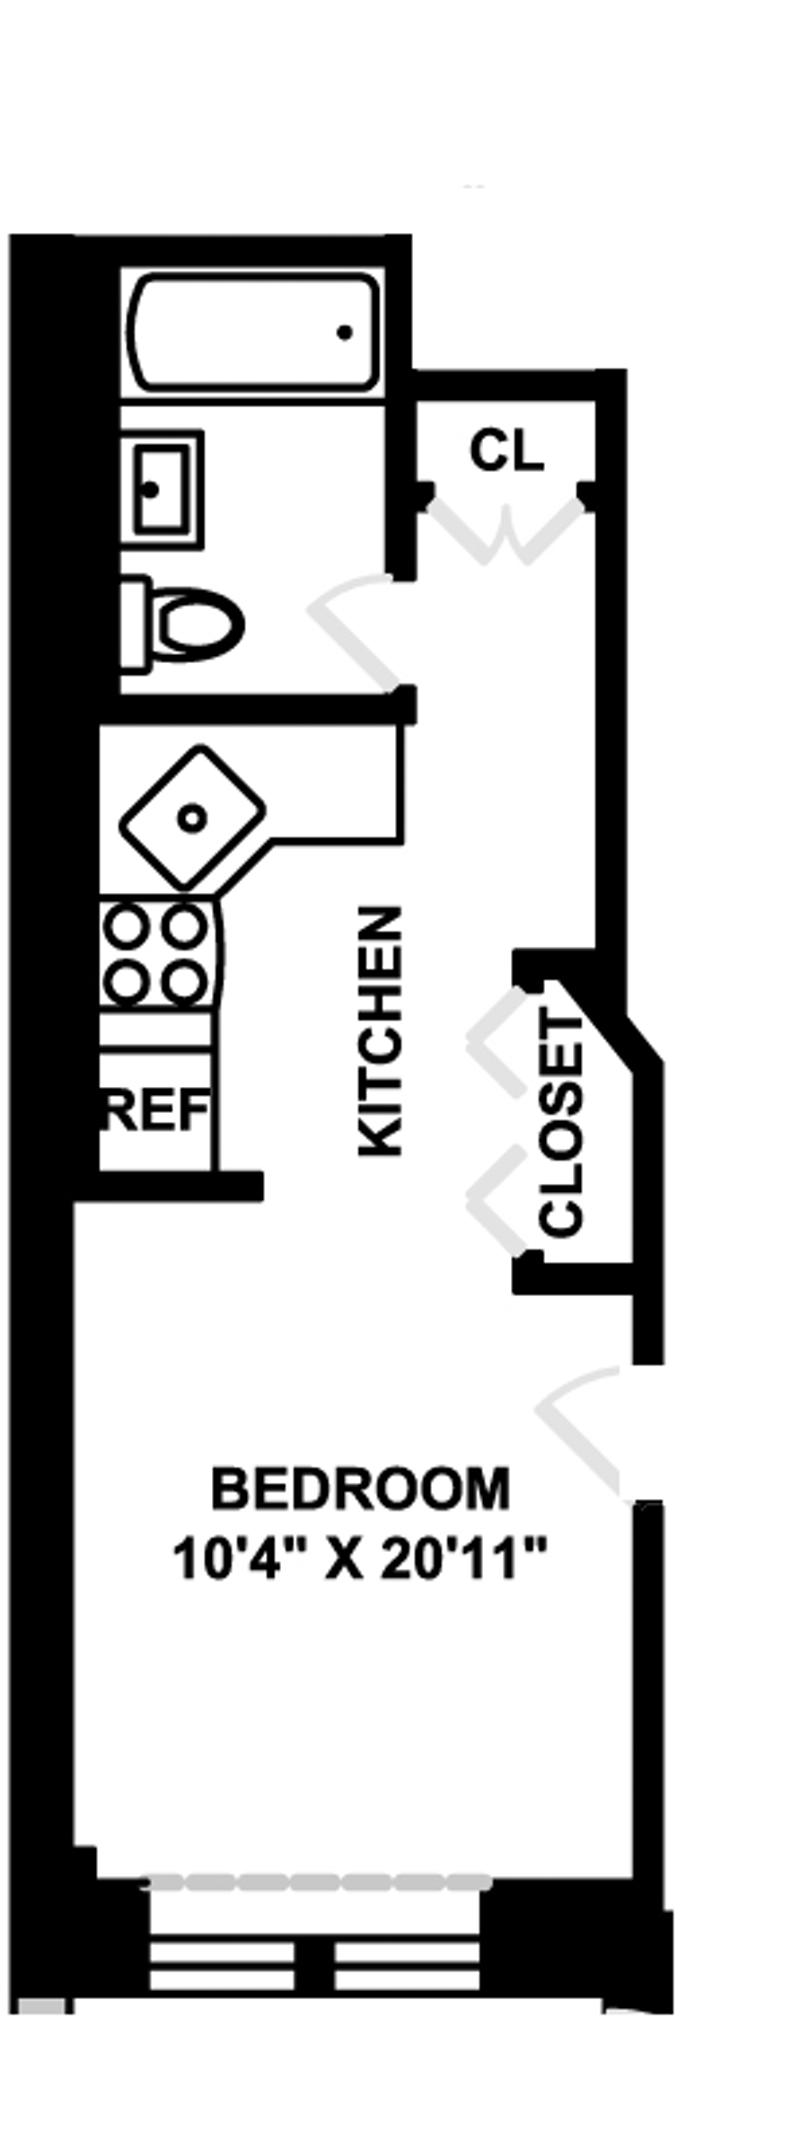 Floorplan for 123 West 78th Street, GF